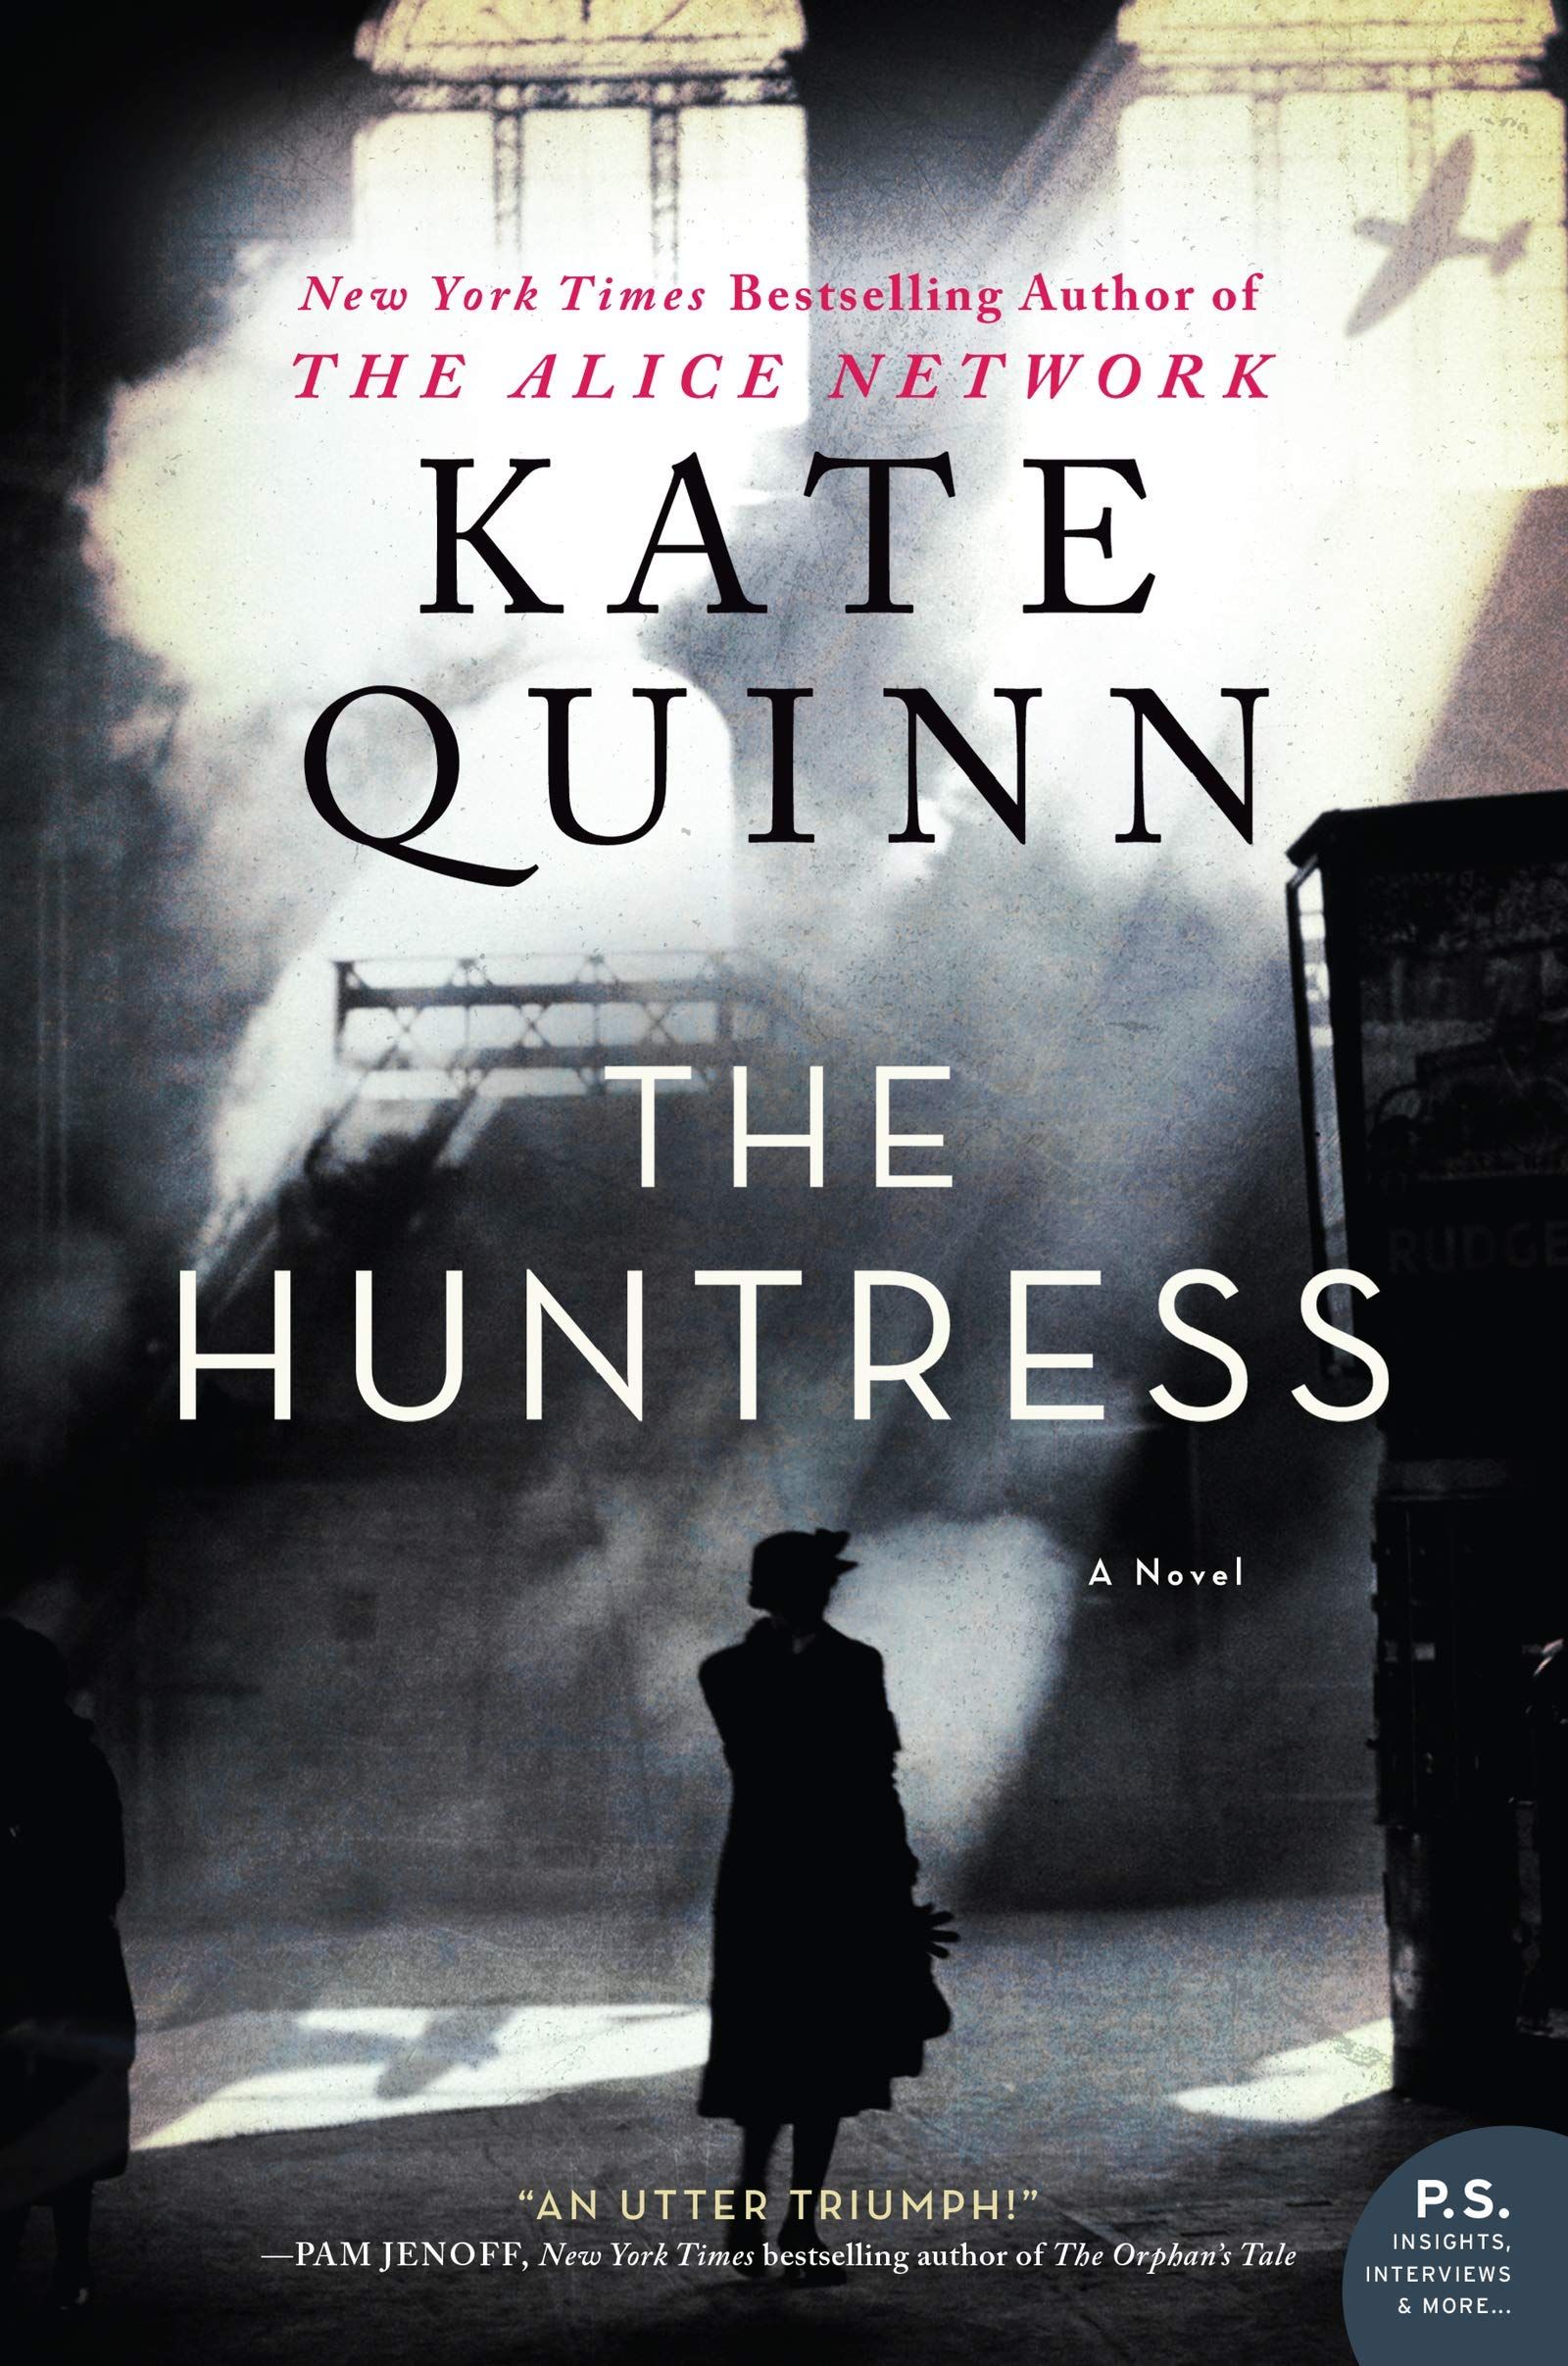 Kate Quinn's The Huntress: World War II Fictional Story